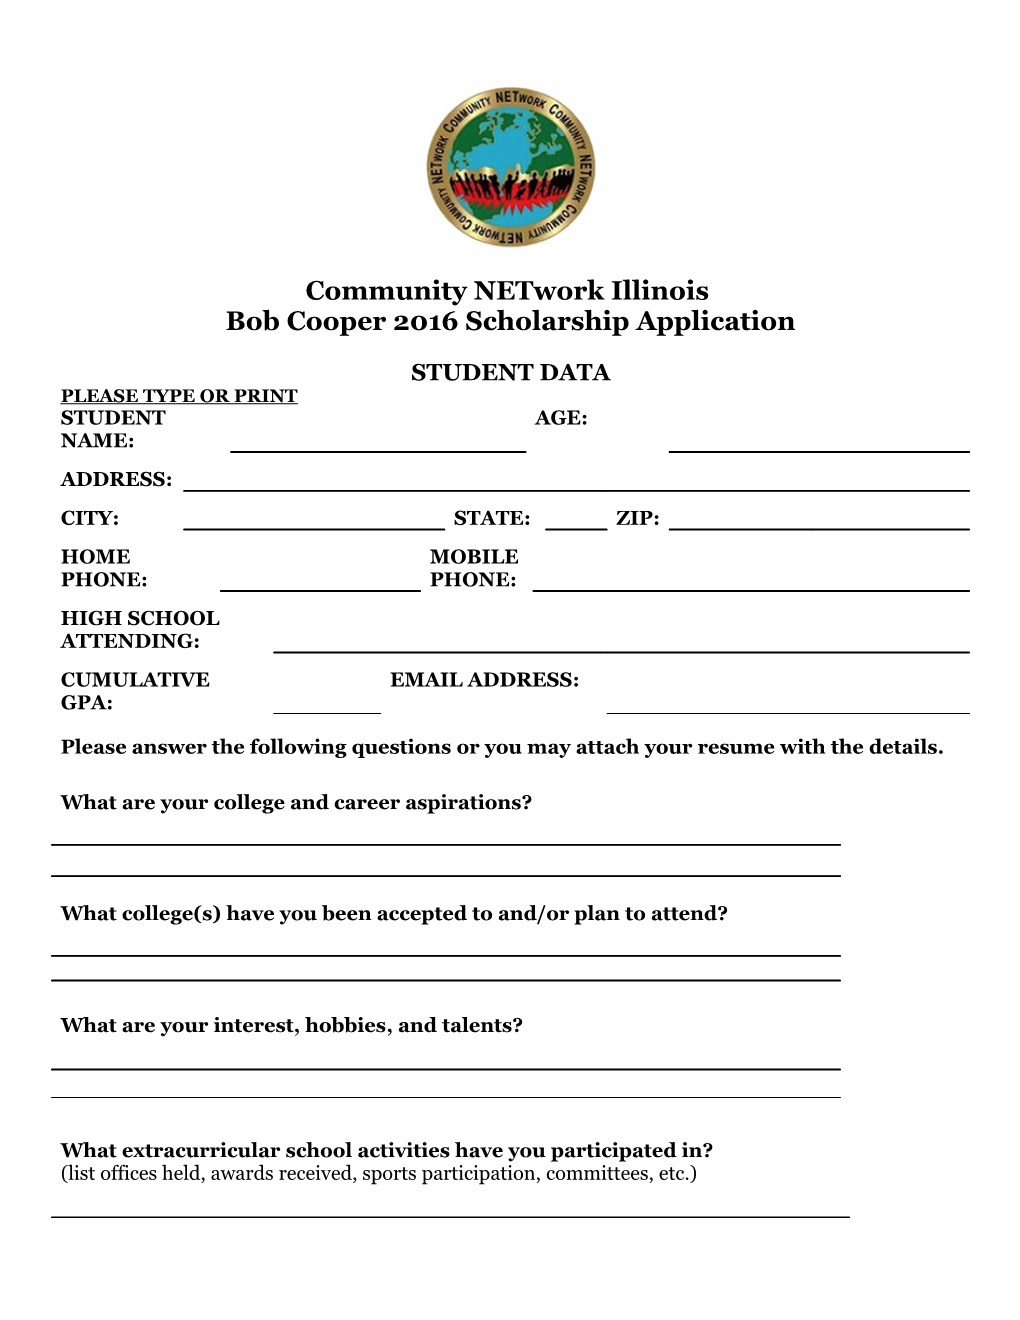 Bob Cooper 2016 Scholarship Application